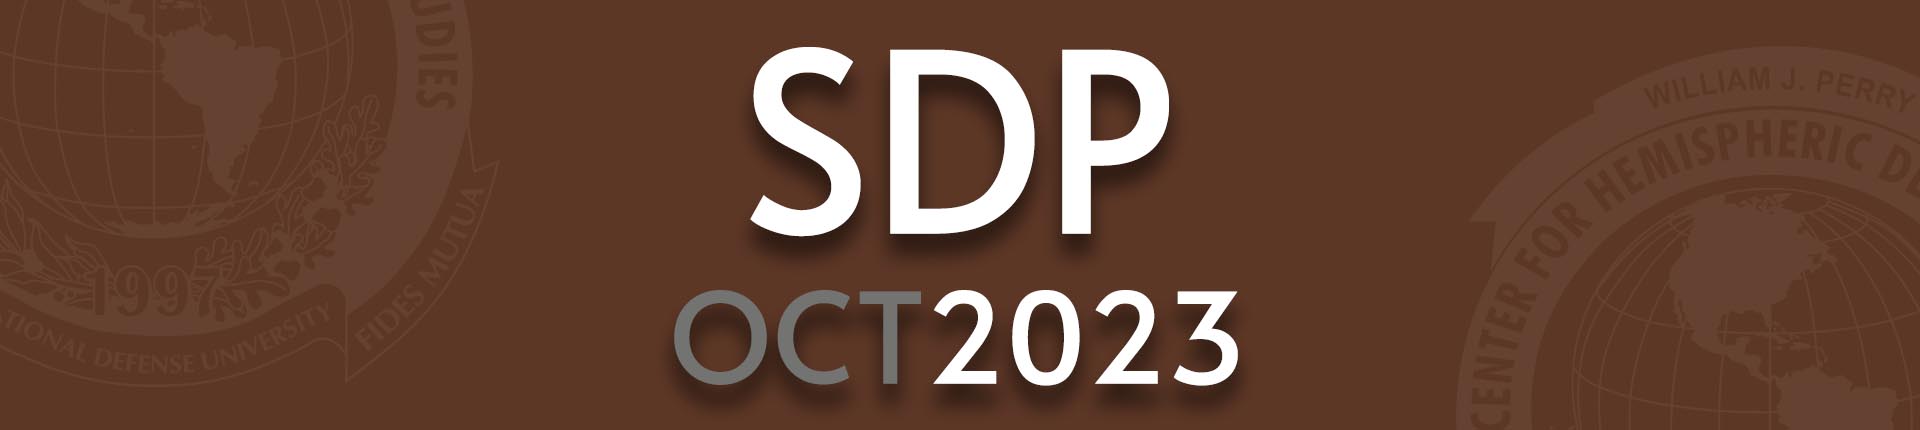 course masthead - SDP 2023